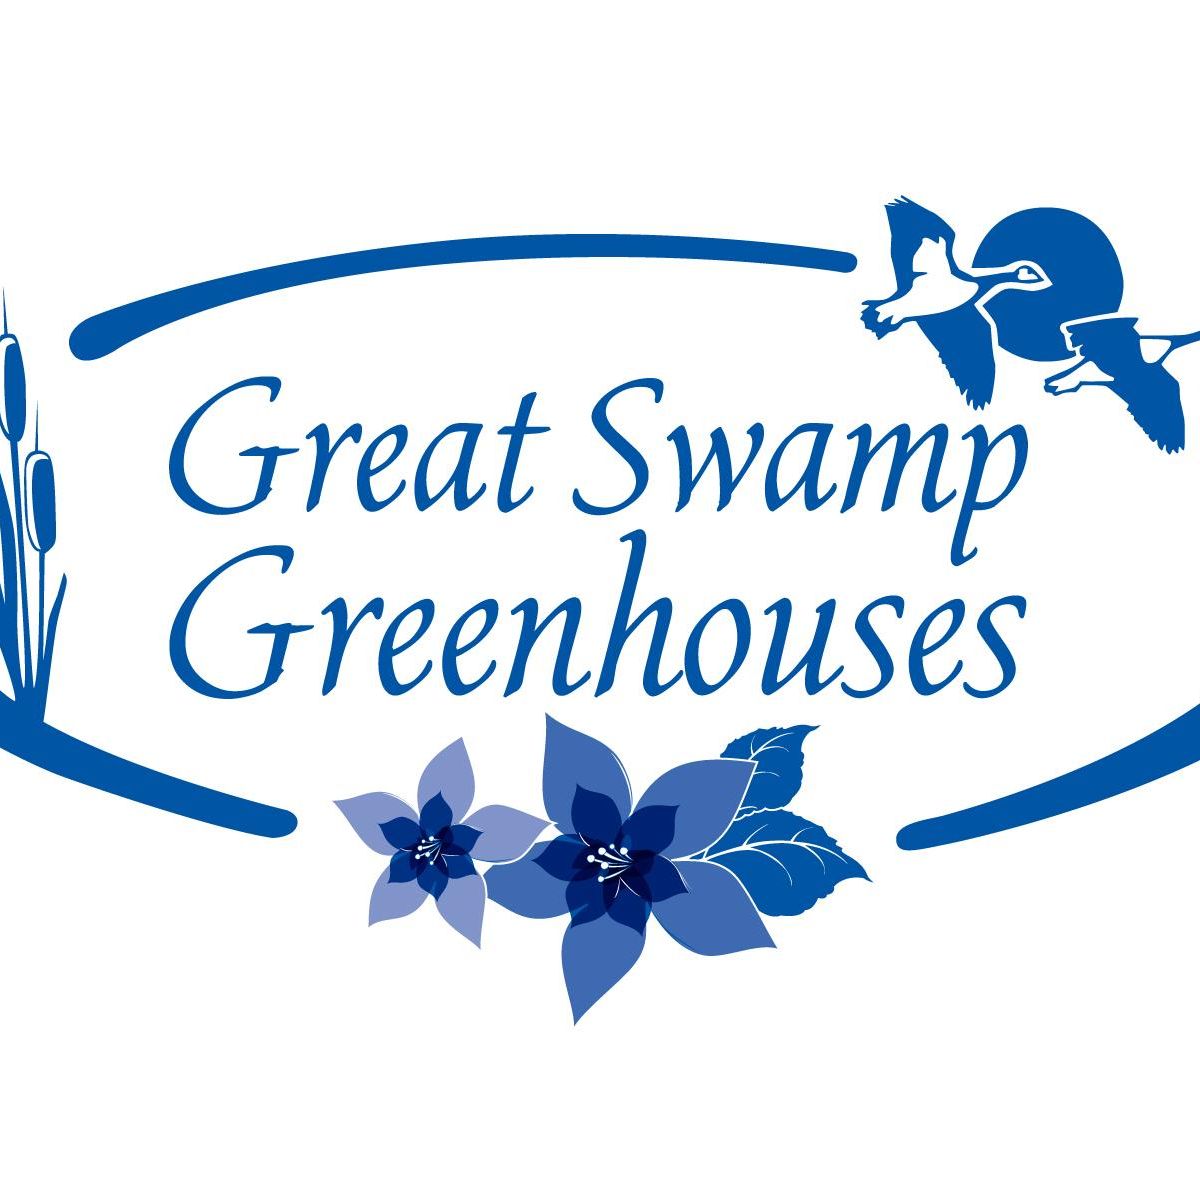 GREAT SWAMP GREENHOUSES